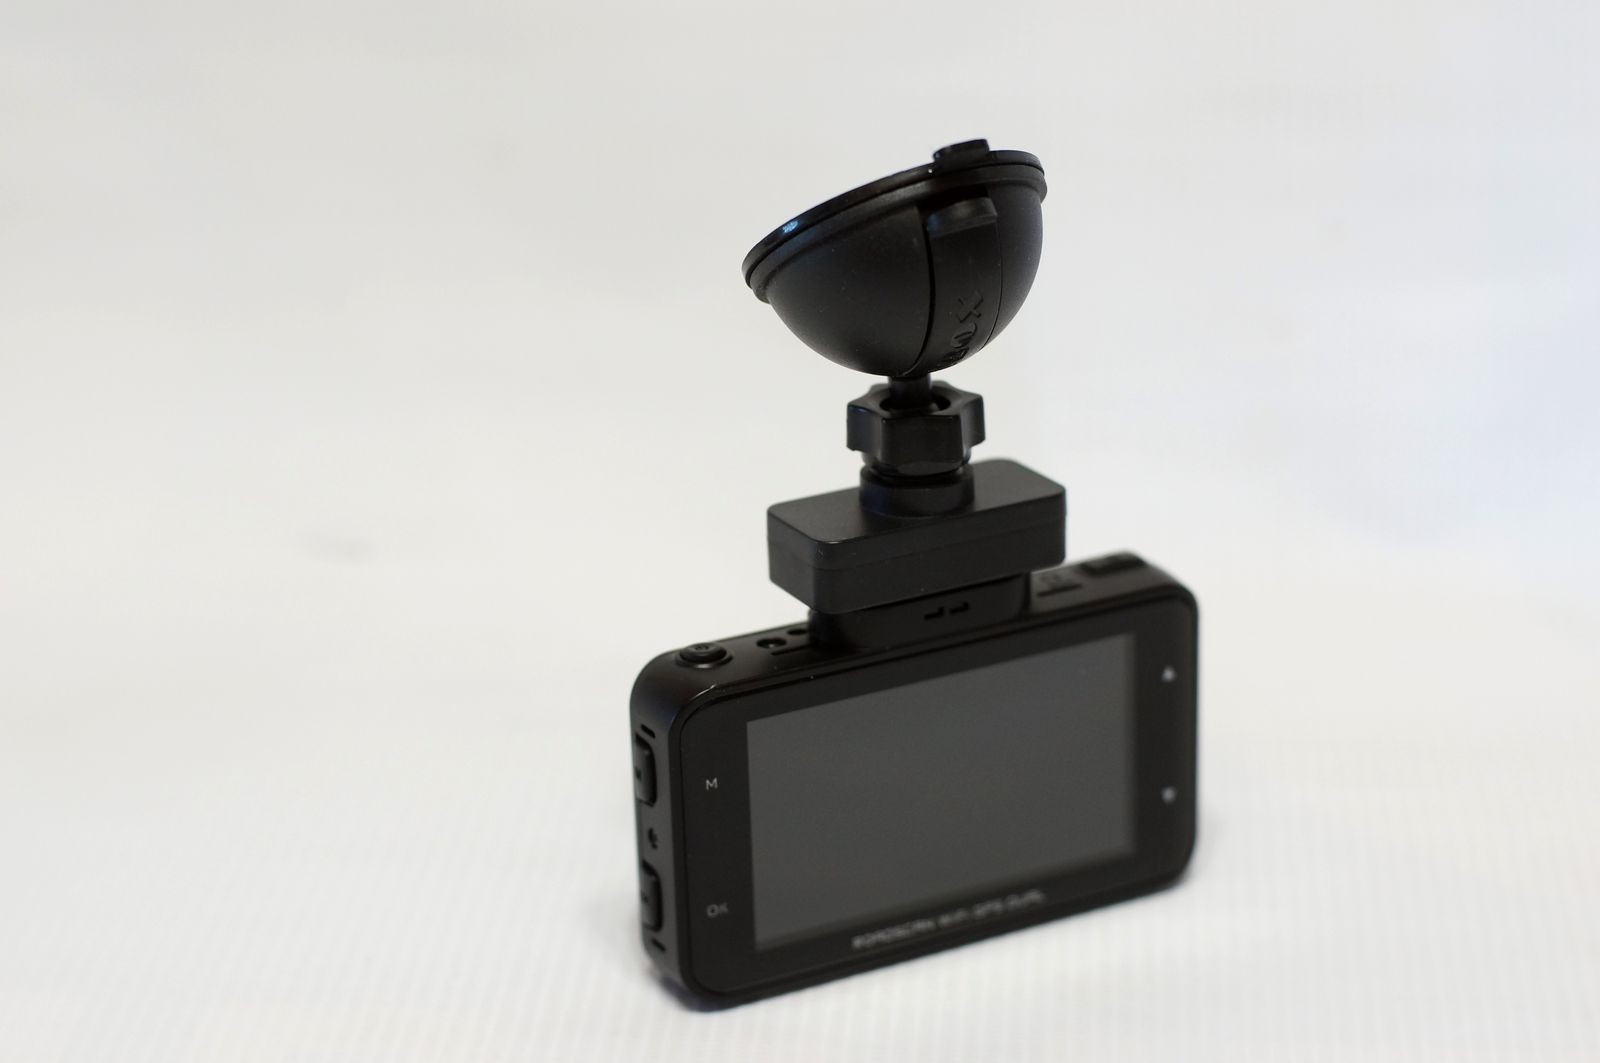 «Комбо-устройство… без радар-детектора». Обзор видеорегистратора iBOX Roadscan WiFi GPS Dual